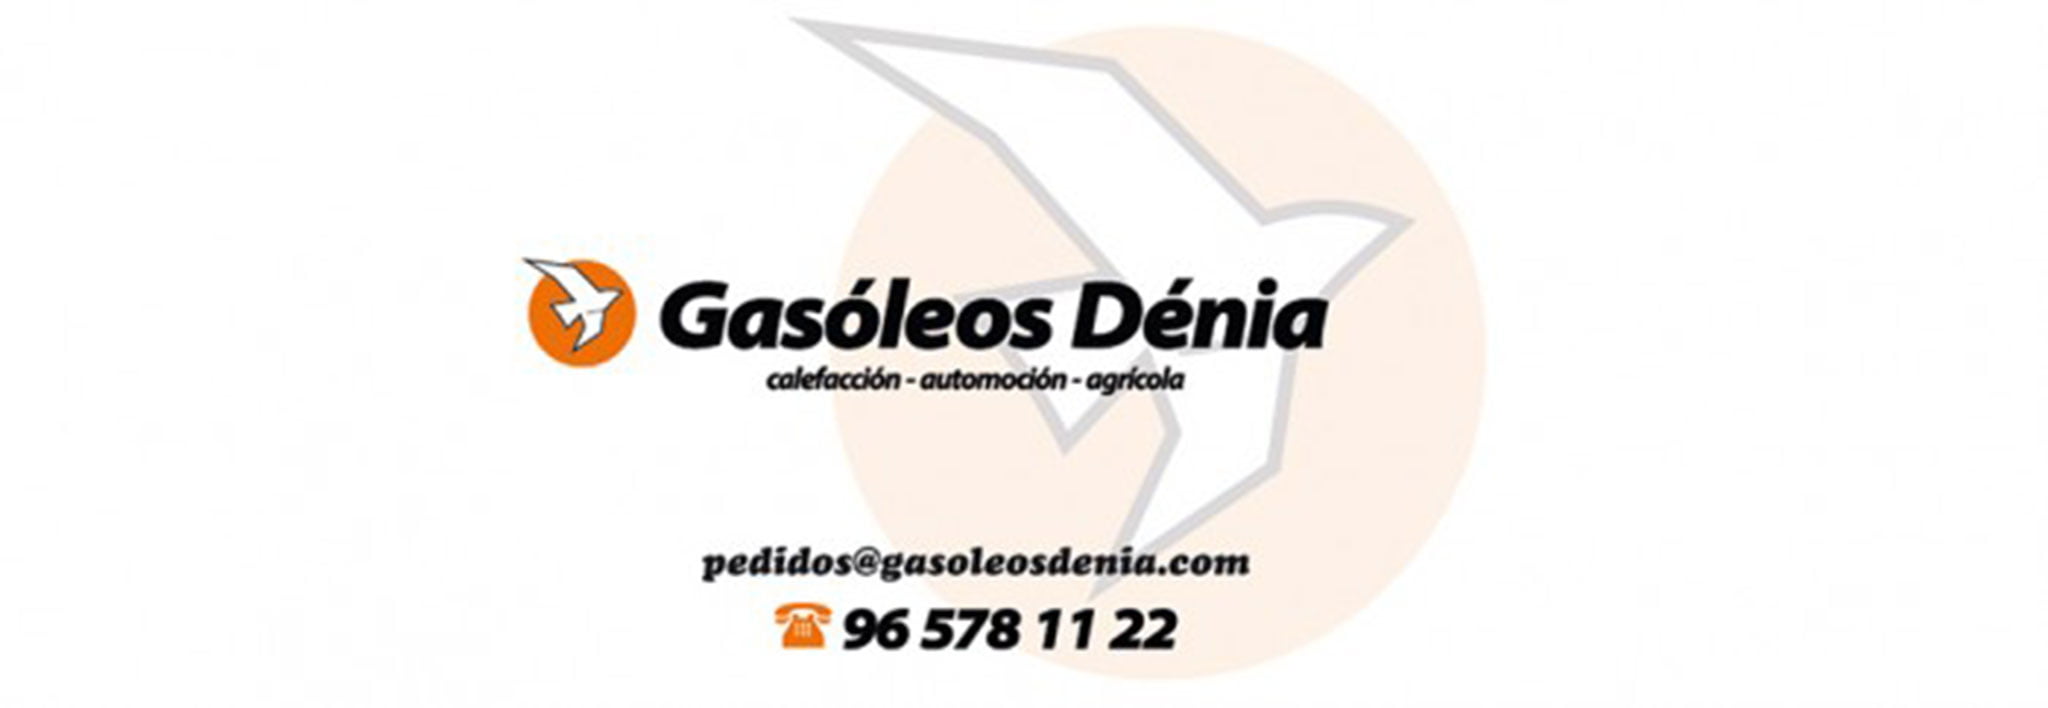 Logotipo Gasóleos Dénia